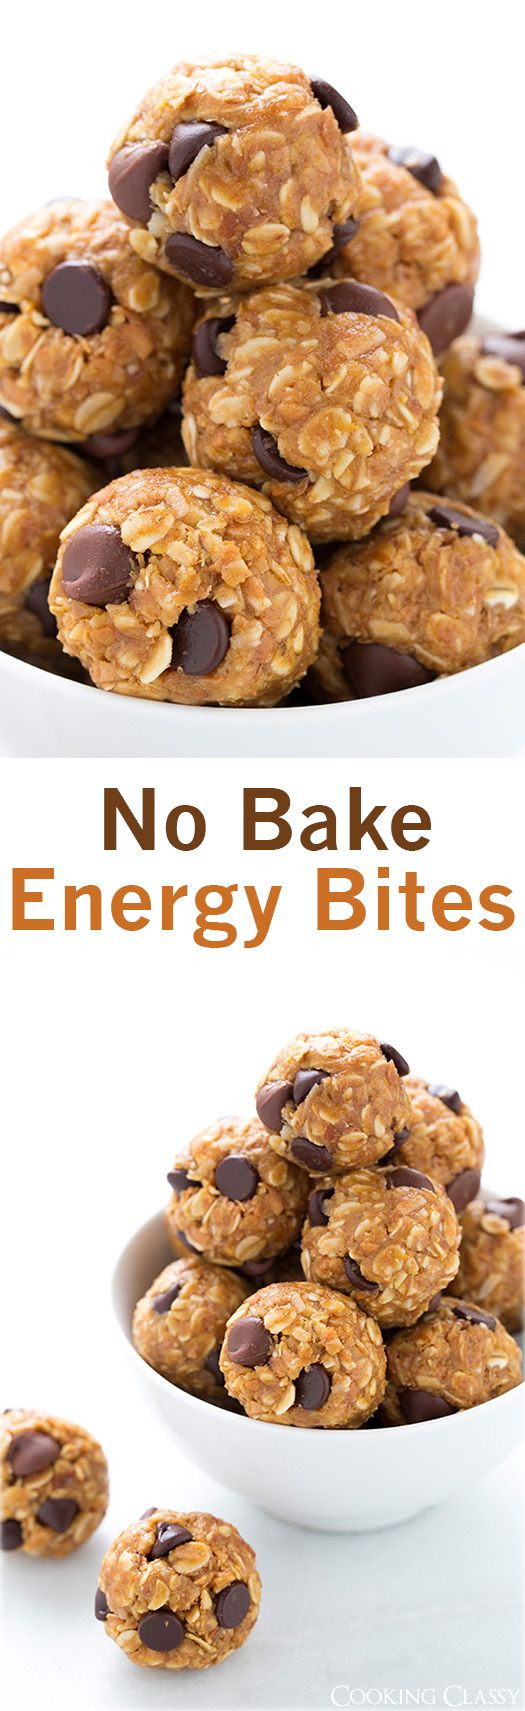 Healthy Baked Snacks Recipes
 Best 25 School snacks ideas on Pinterest